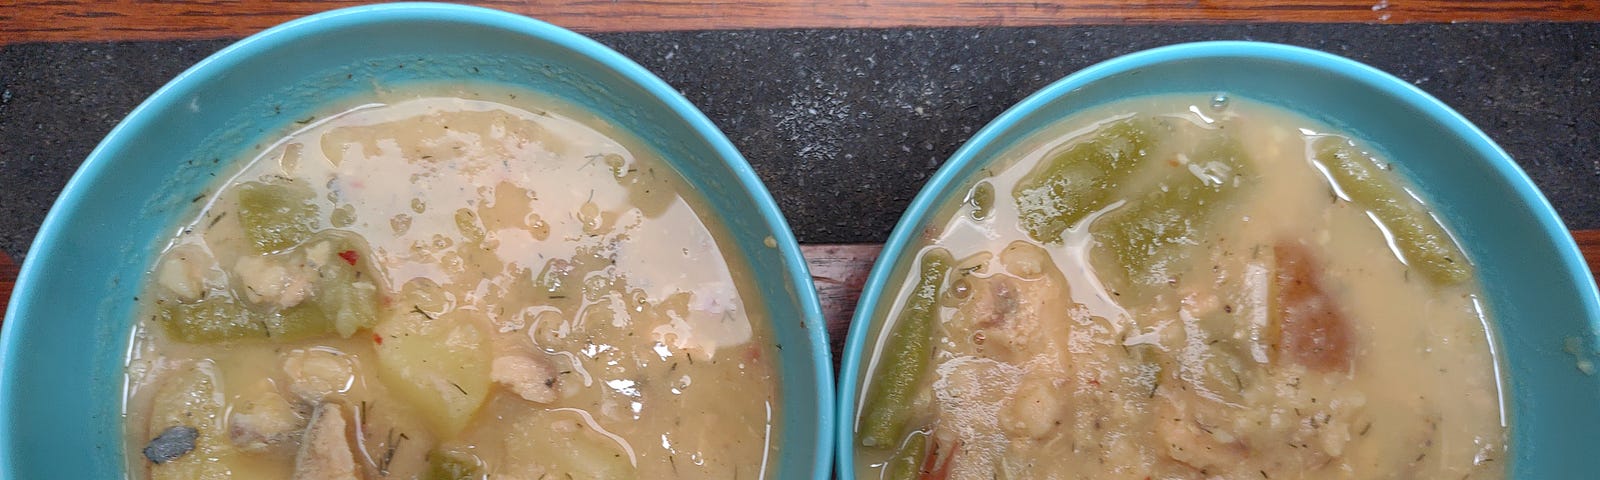 Two bowls of salmon chowder